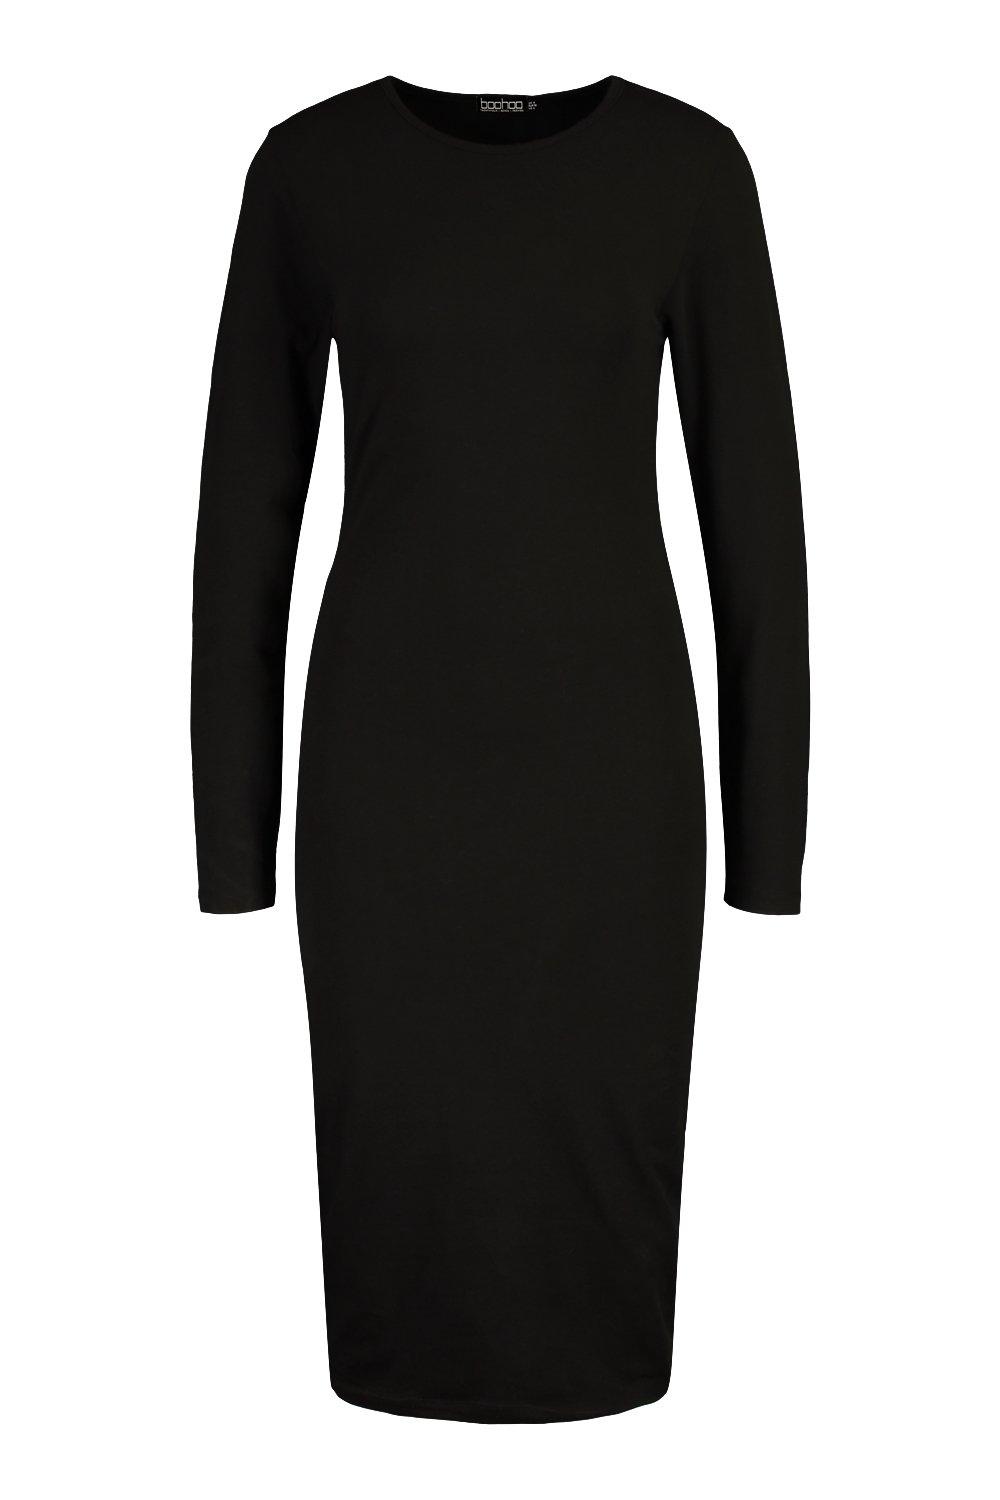 Basic Black Jersey Long Sleeve Bodycon Dress